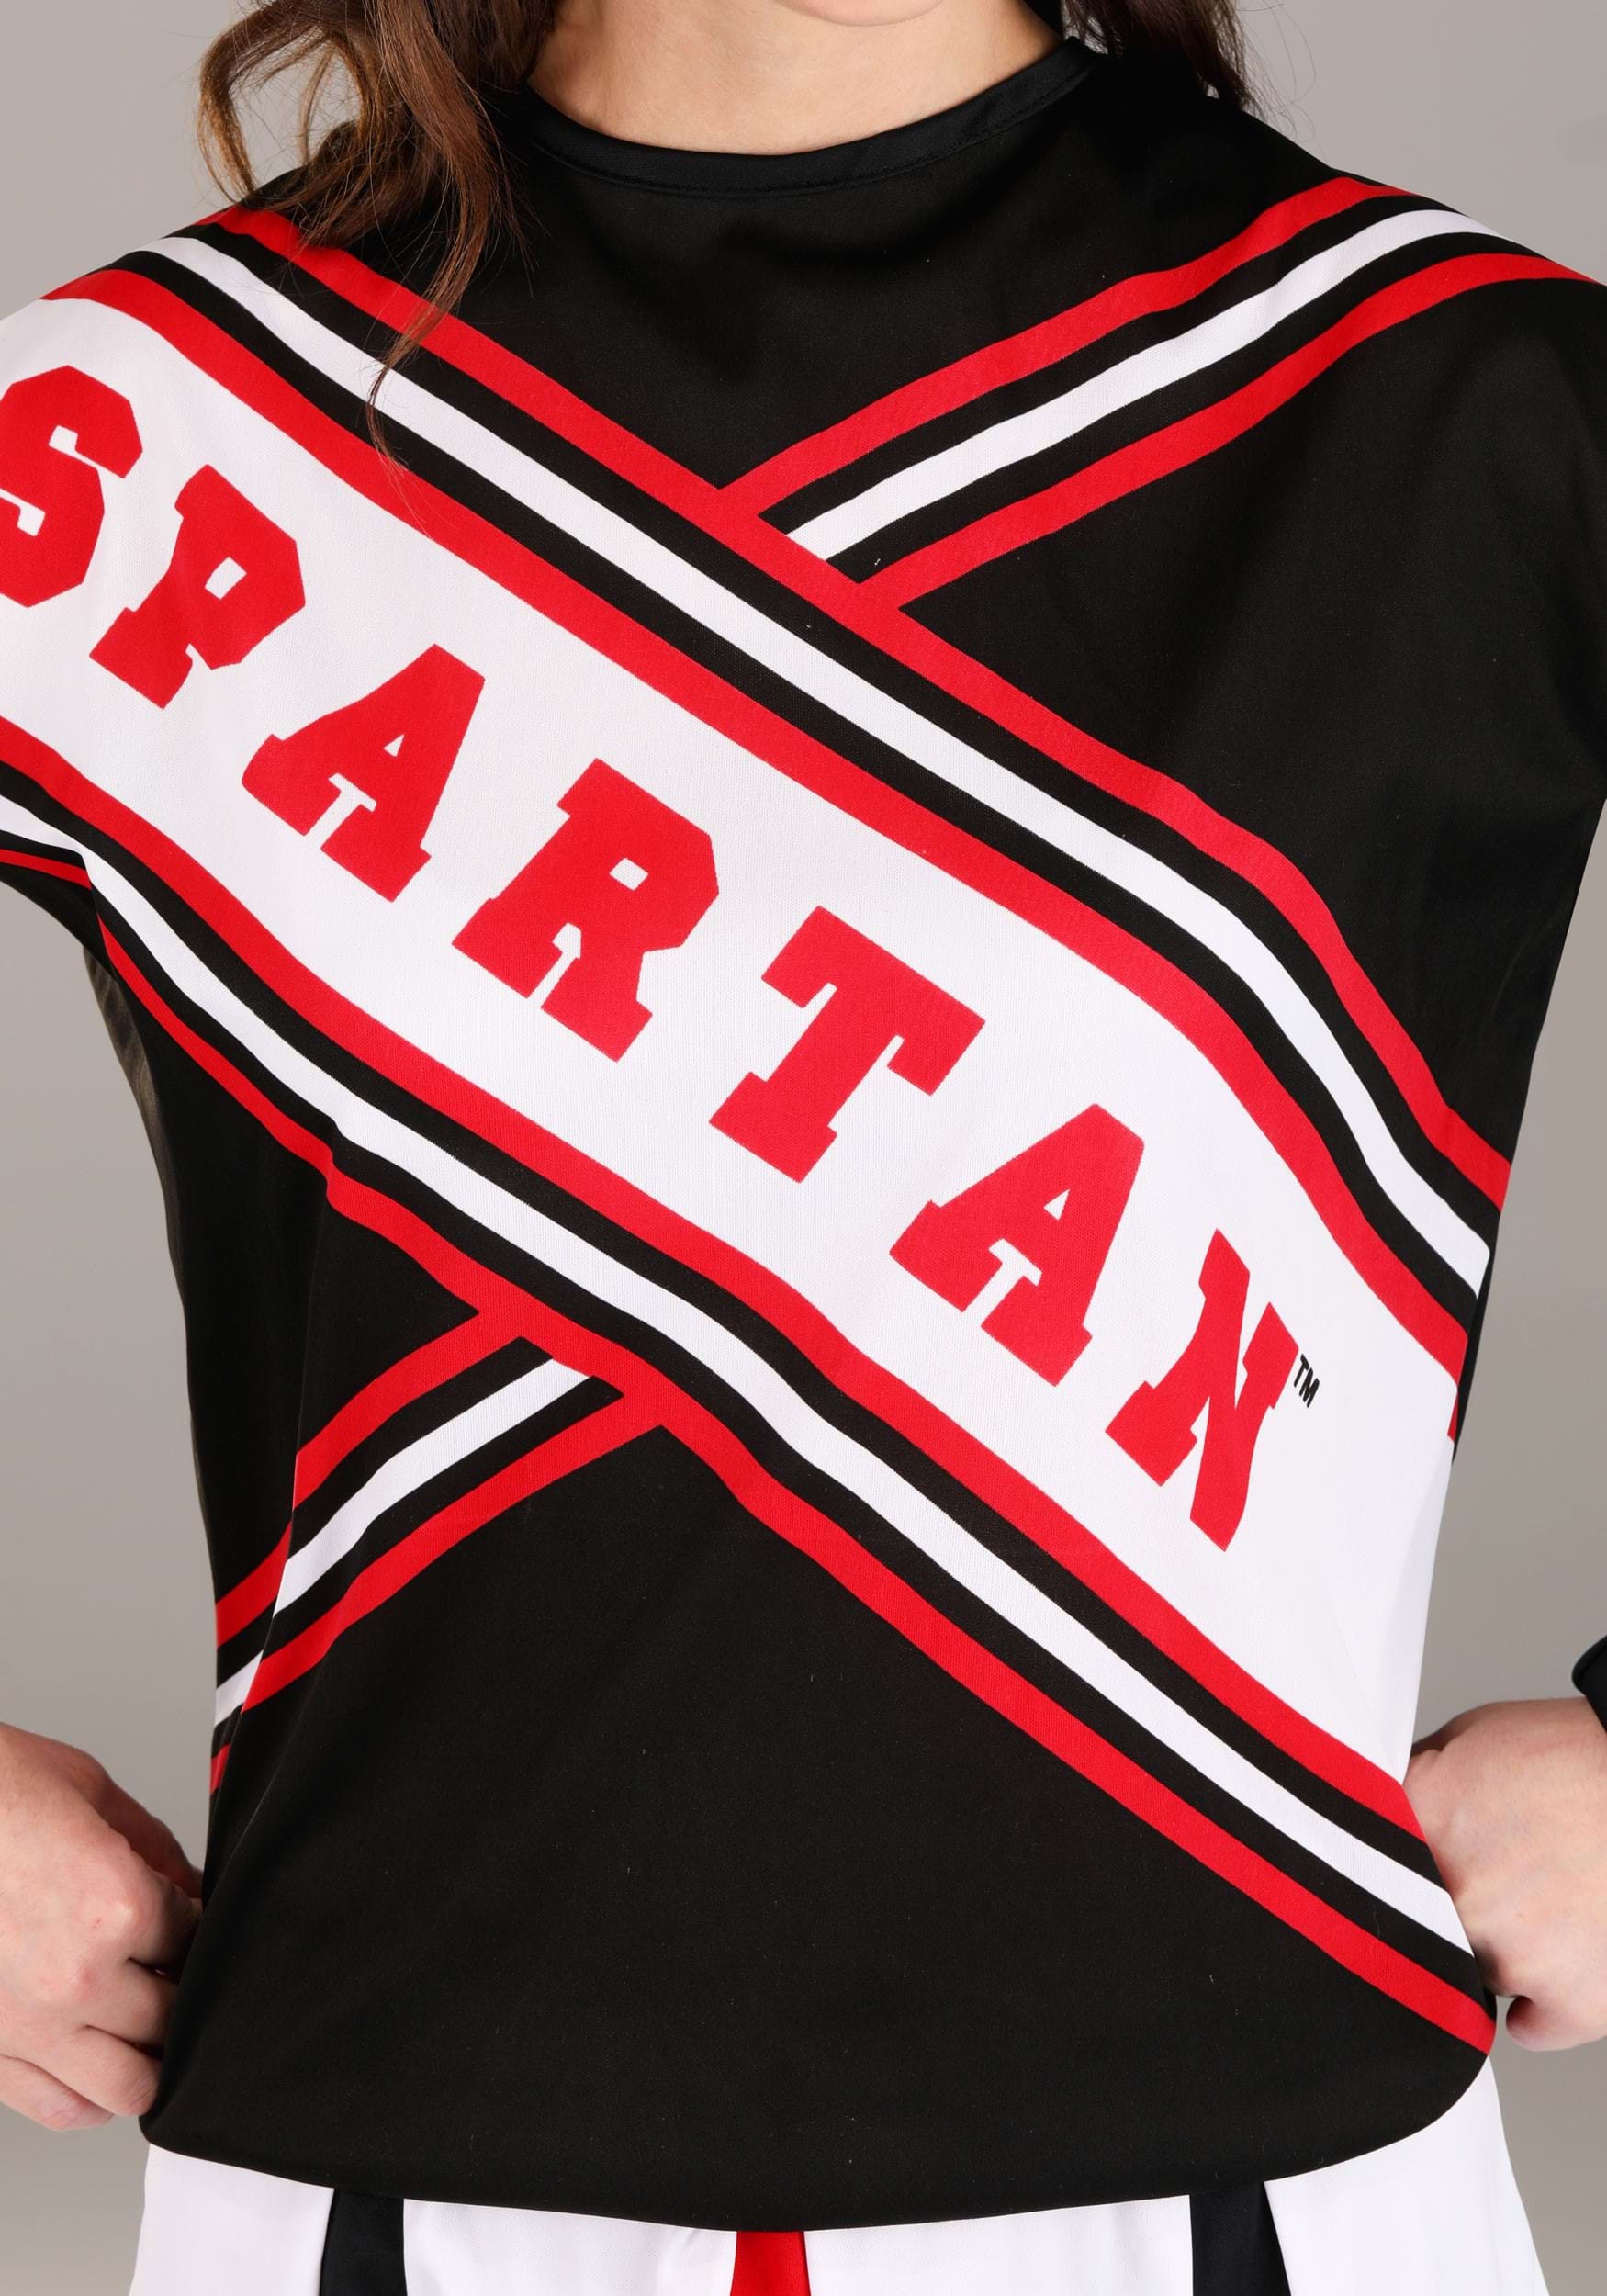 Women S Saturday Night Live Spartan Female Cheerleader Costume